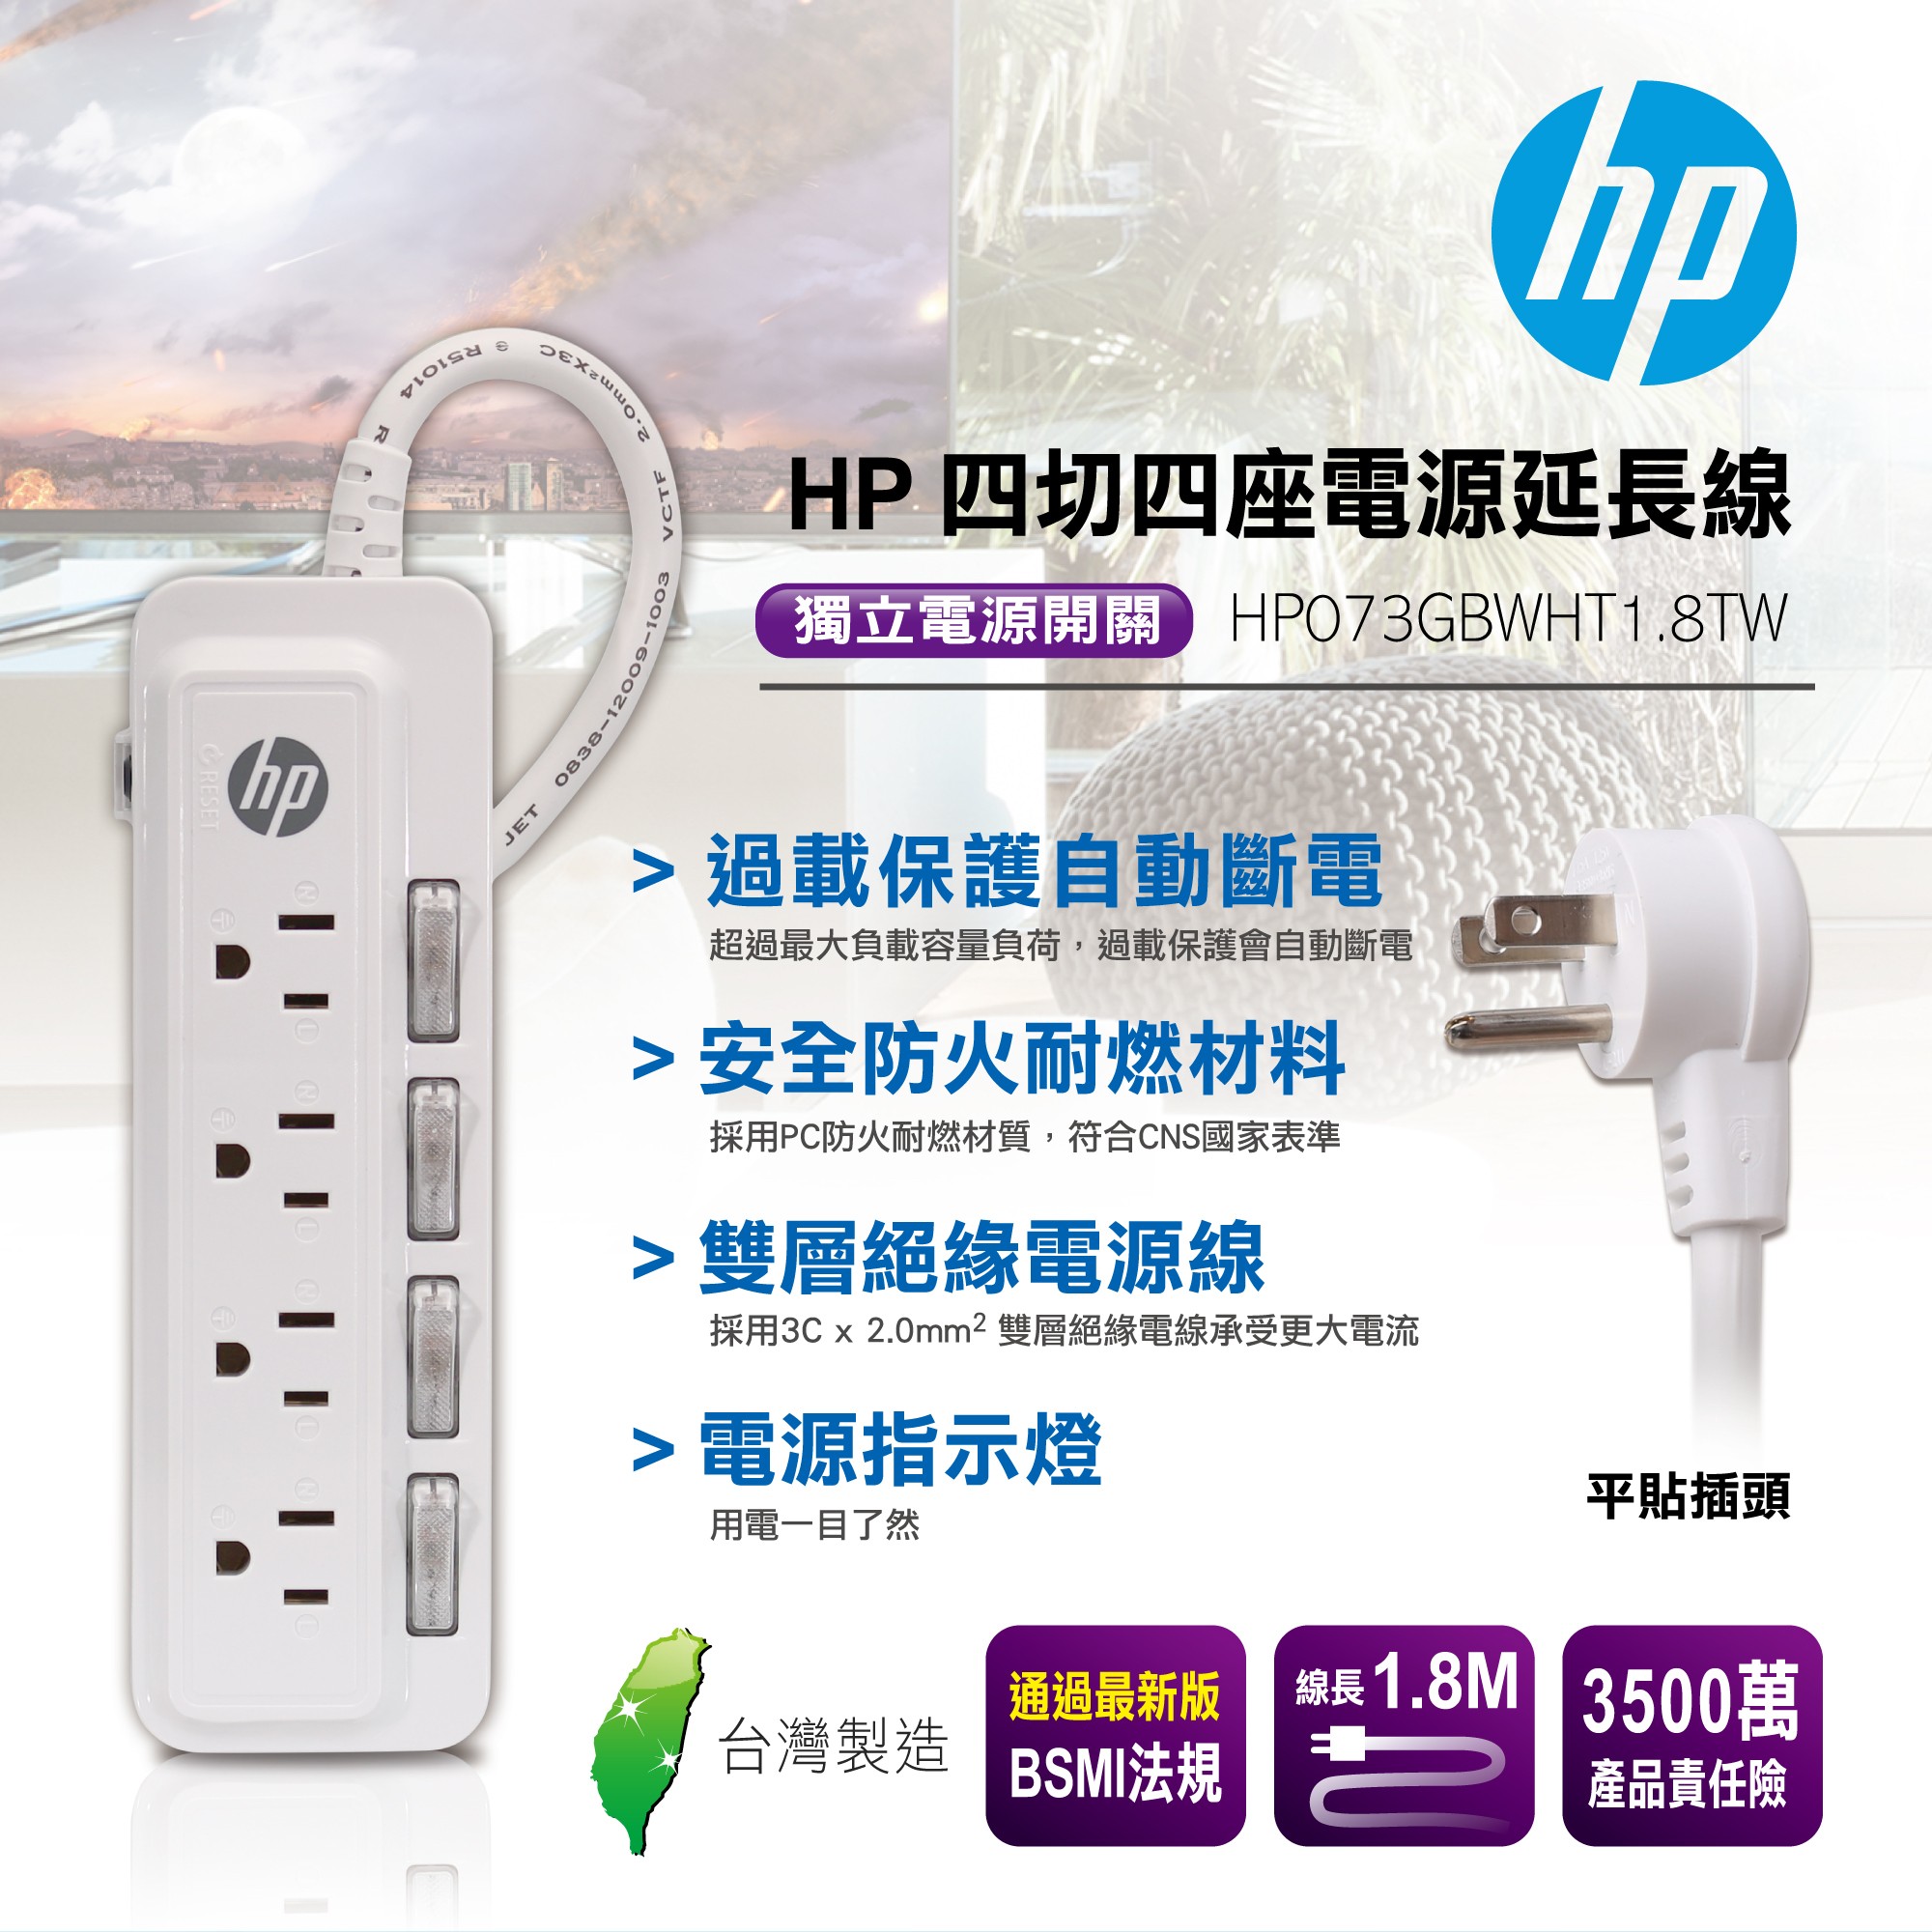 HP 四切四座電源延長線 HP073GBWHT1.8TW